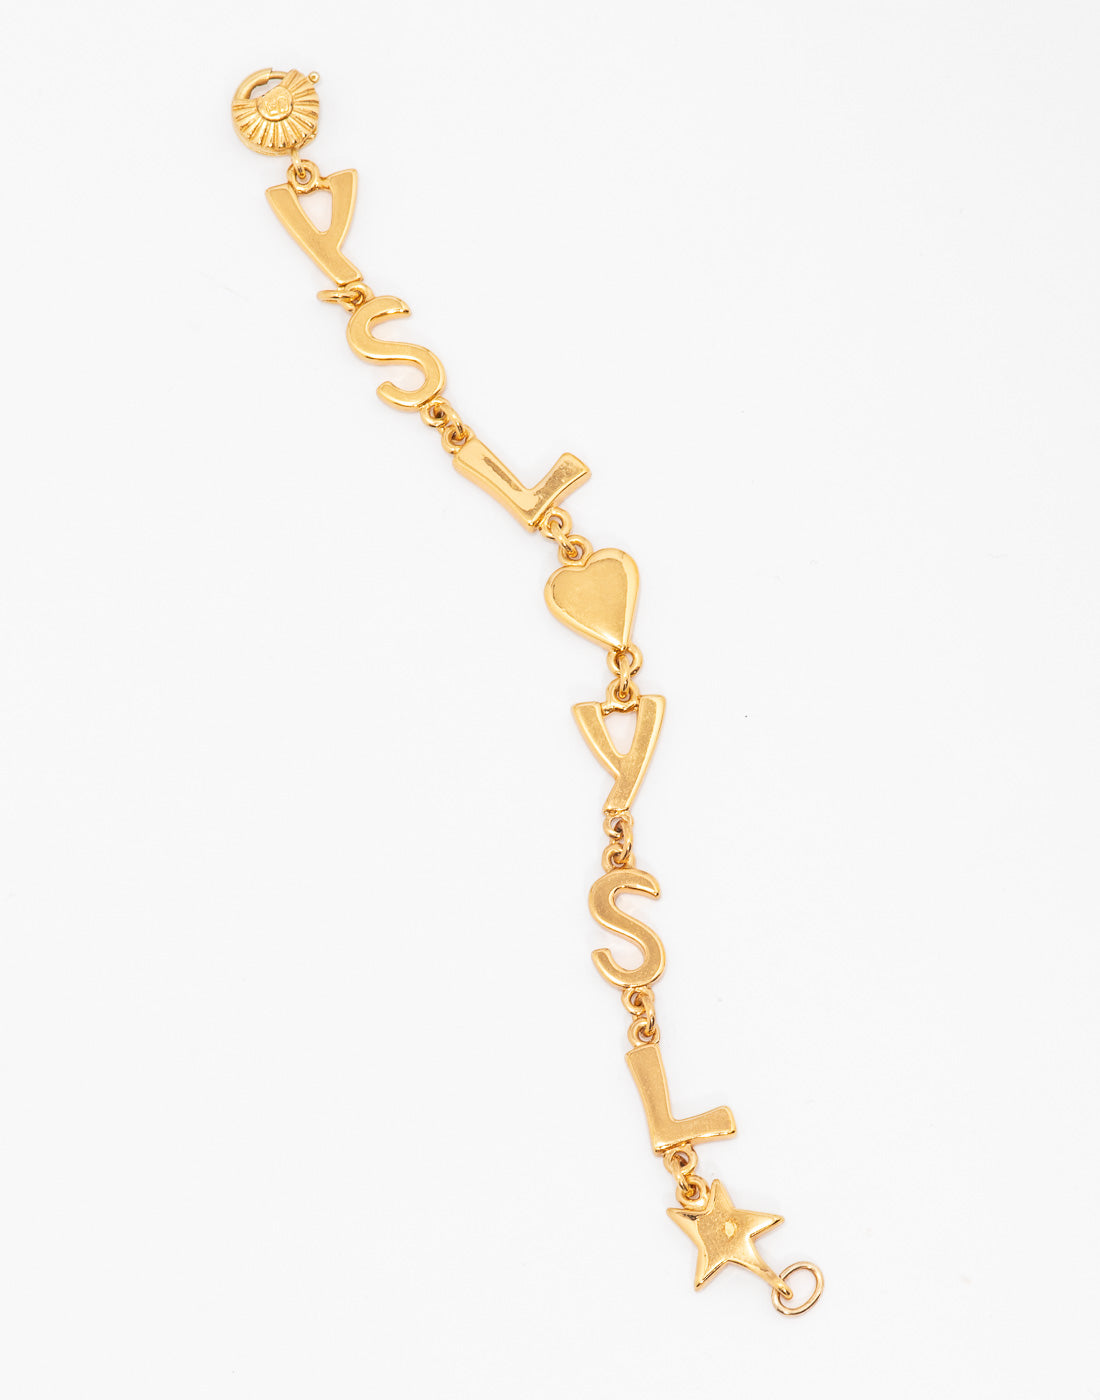 Yves Saint Laurent vintage gold pleated bracelet